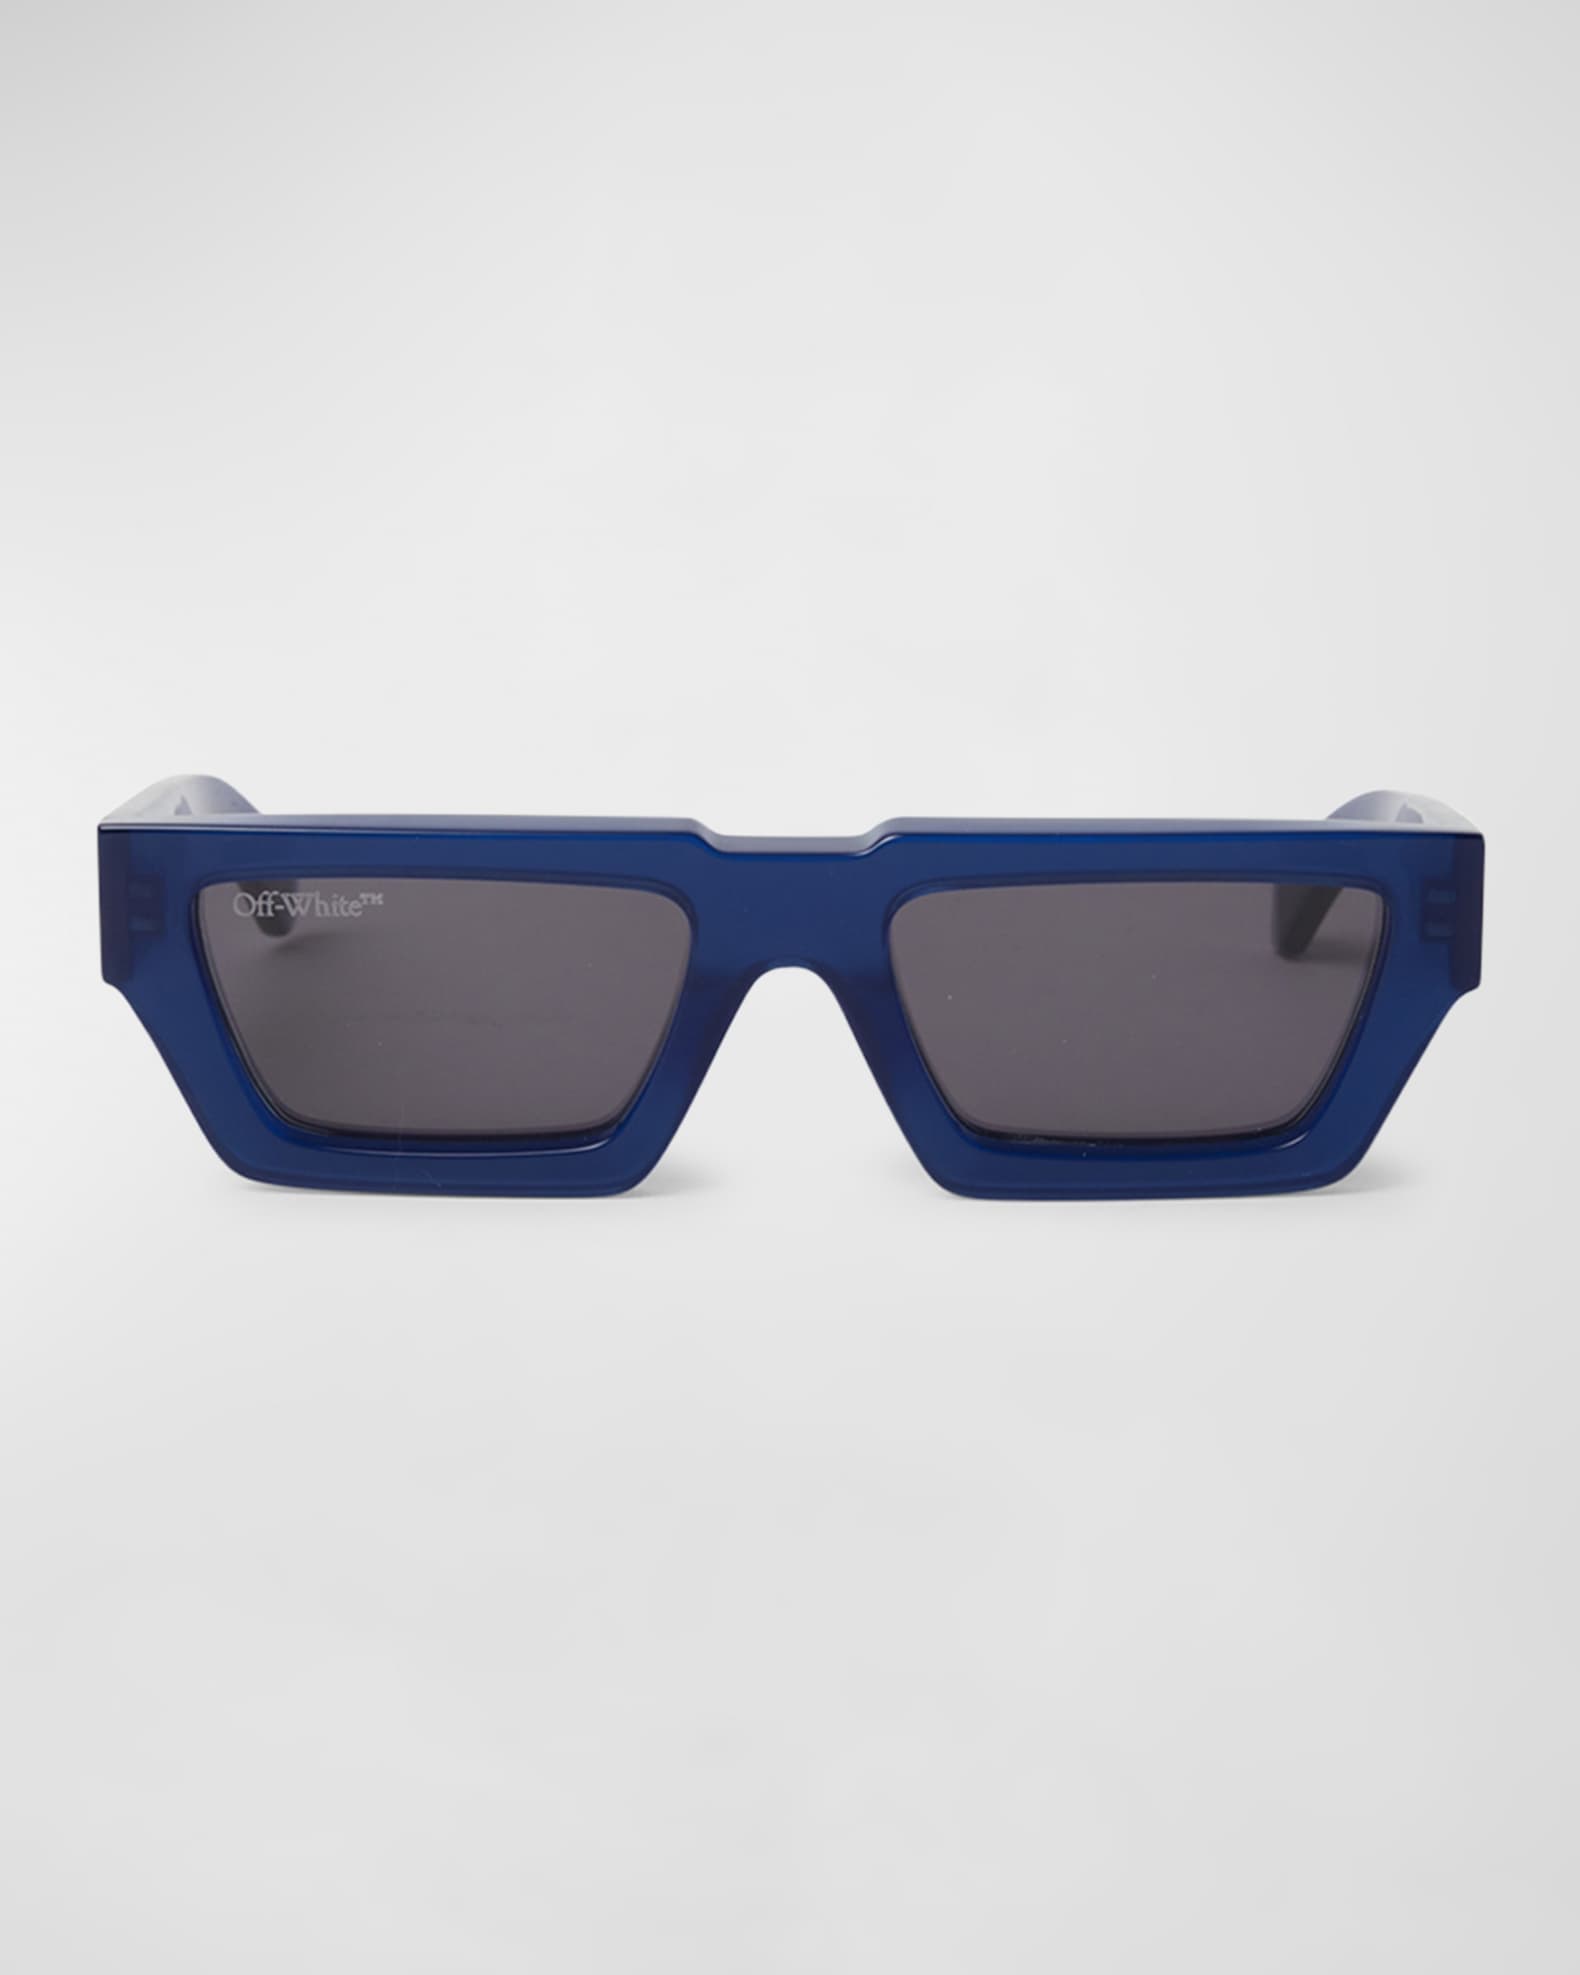 Off-White Men's Manchester Acetate Rectangle Sunglasses, Blue, Men's, Sunglasses Square Sunglasses